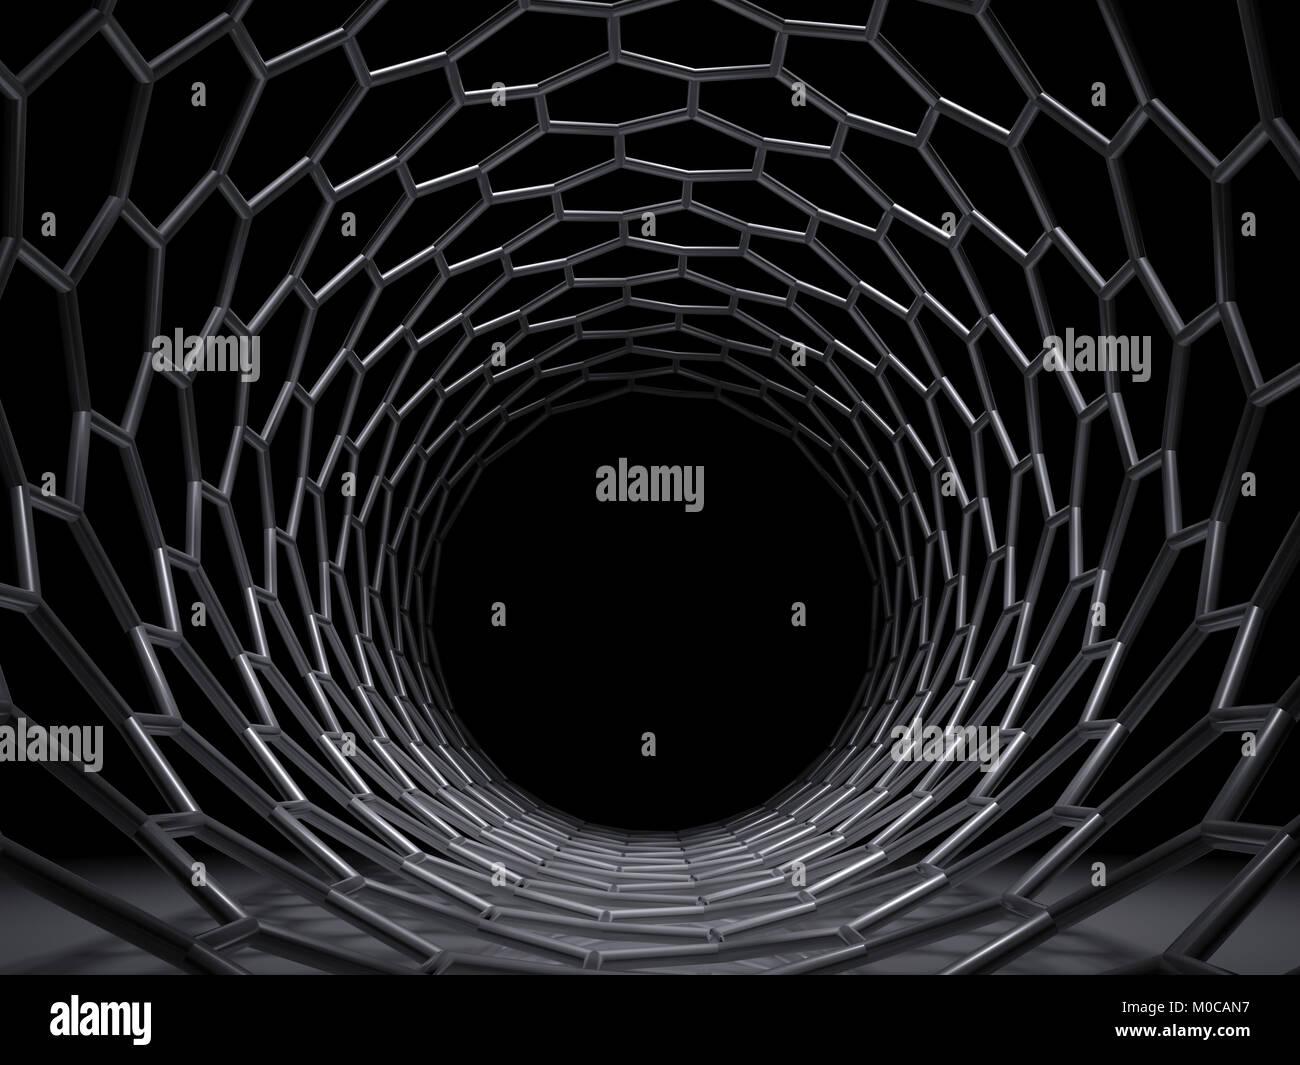 Abstract digital technology background, black tunnel of hexagonal mesh. 3d illustration Stock Photo